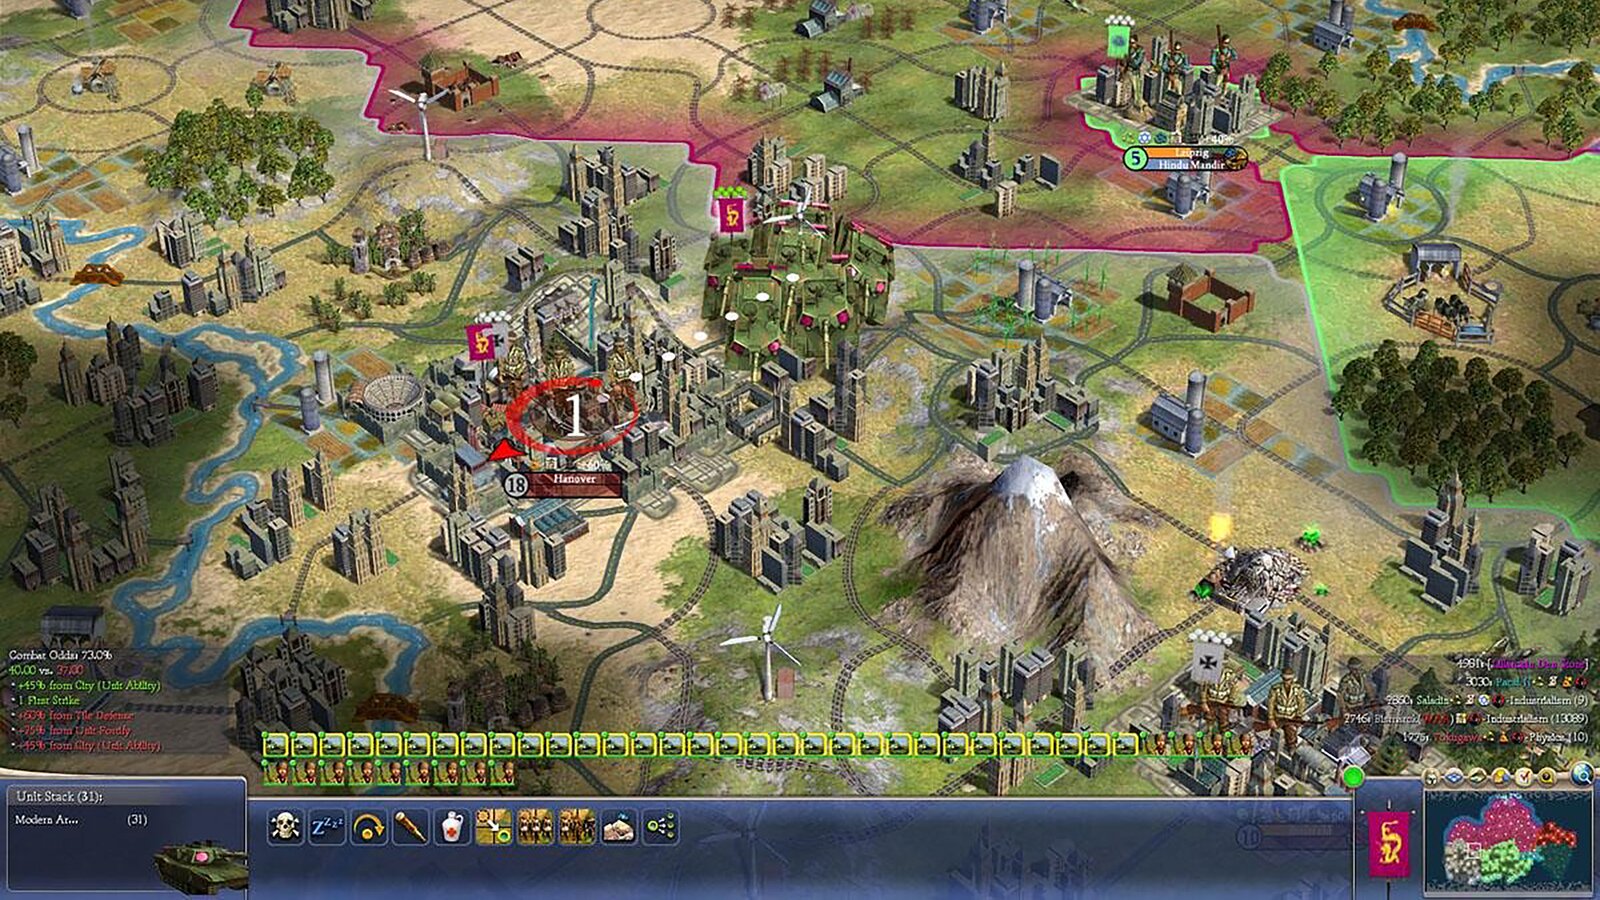 Sid Meier's Civilization IV - Complete Edition